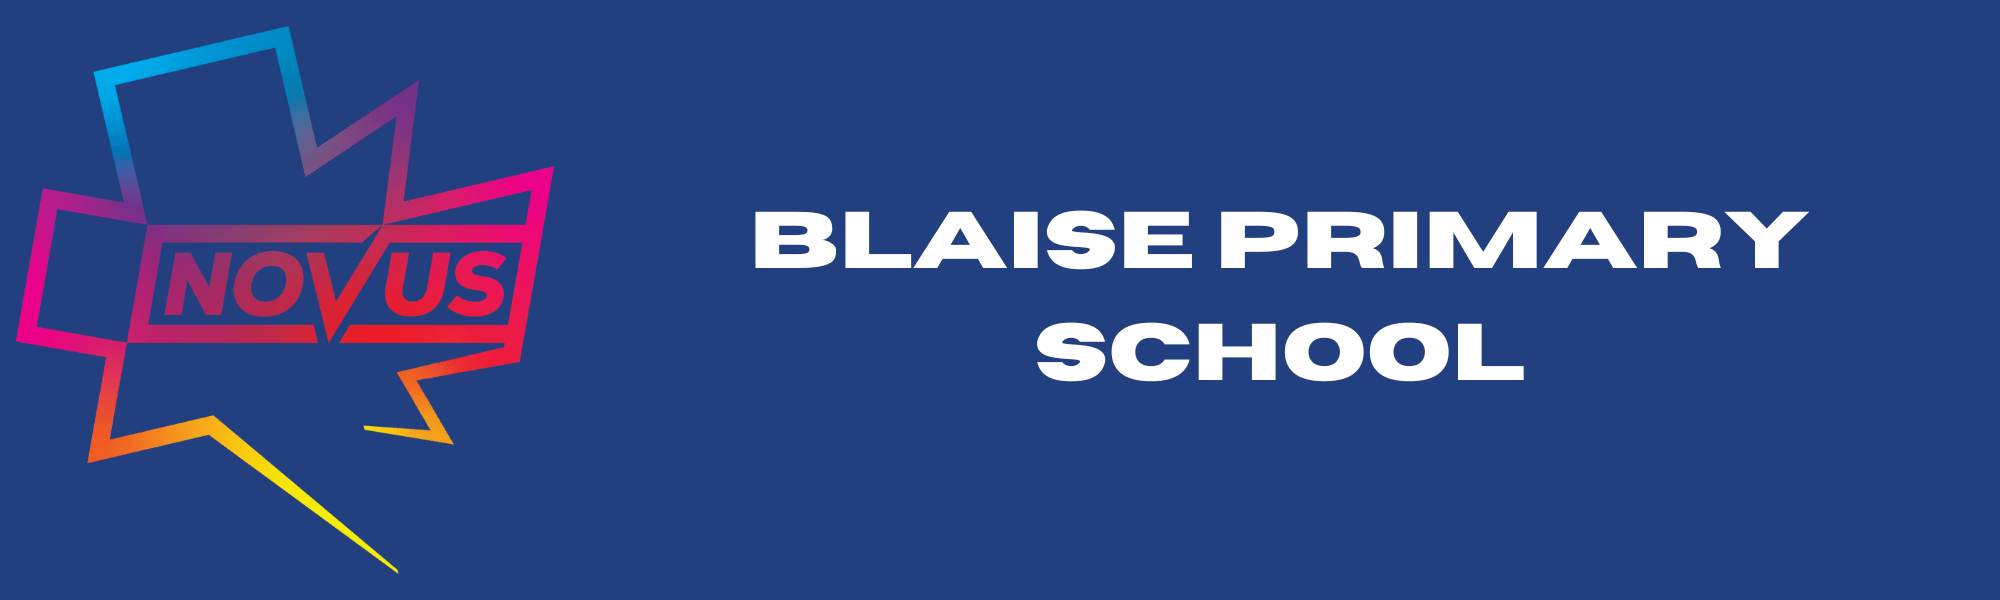 Blaise Primary School Banner